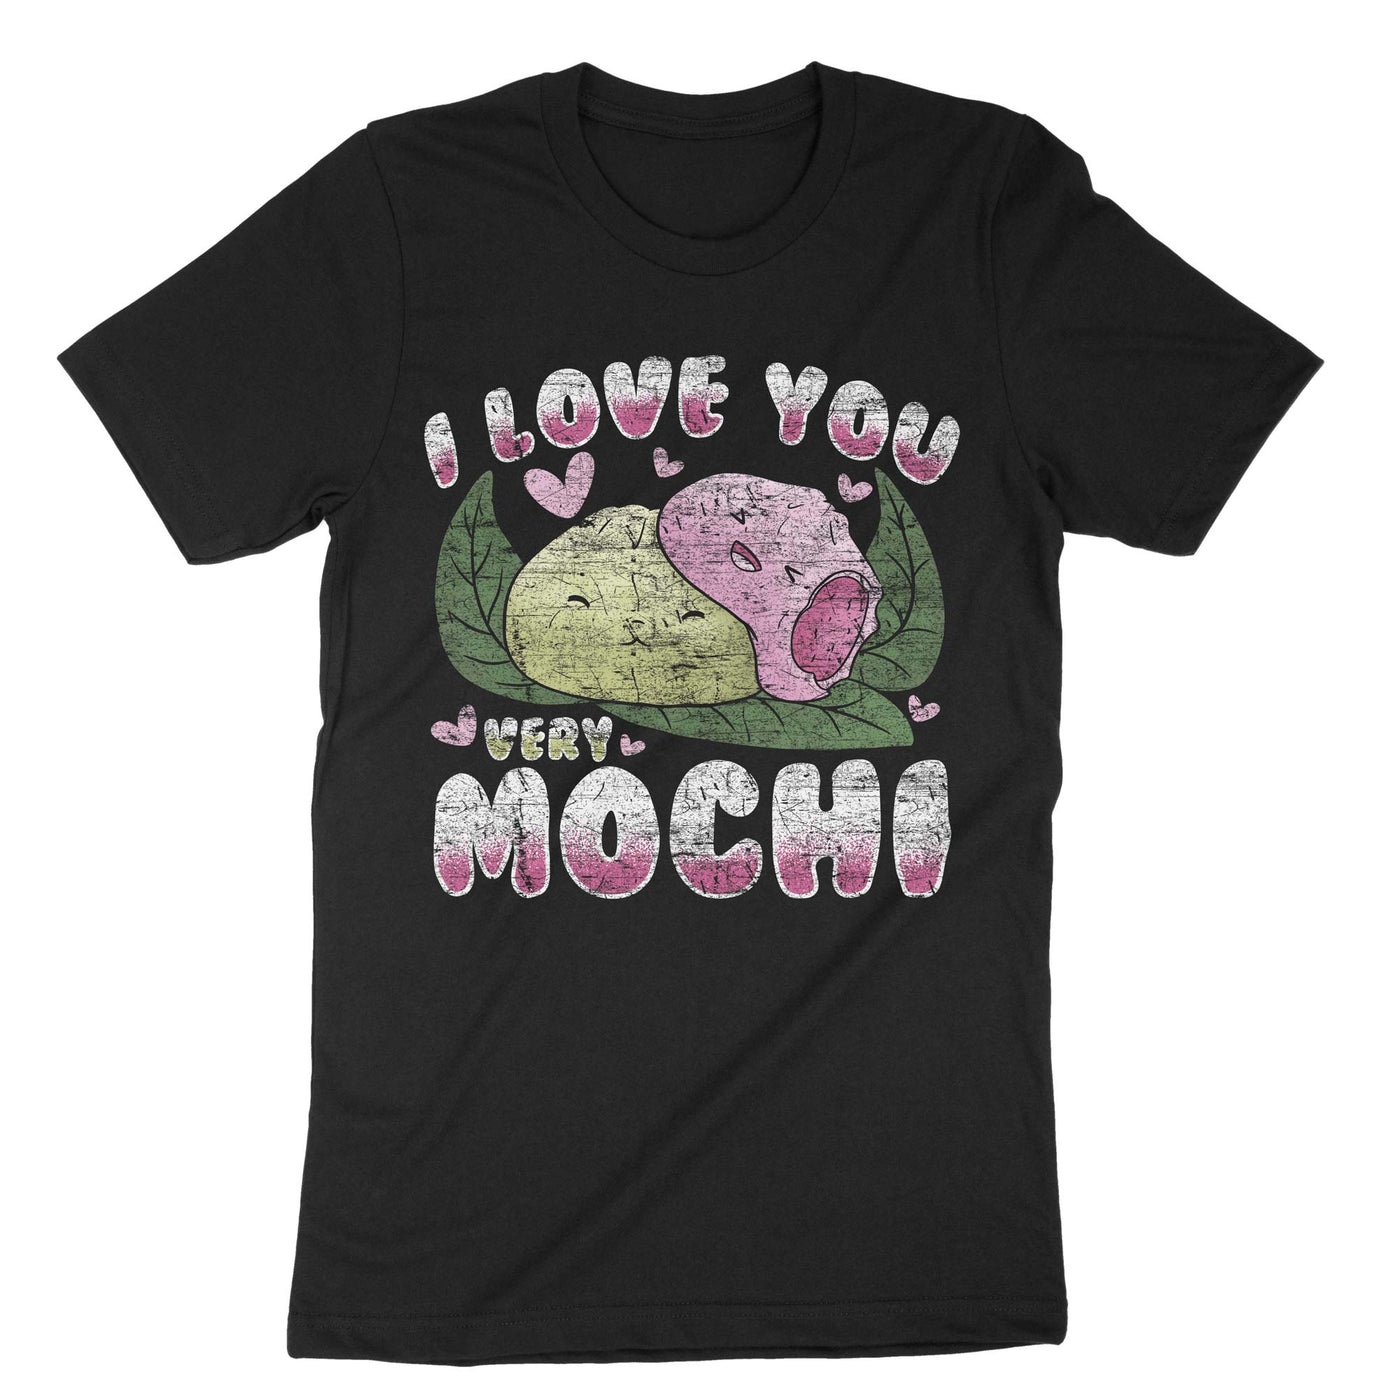 Black I Love You Very Mochi T-Shirt#color_black